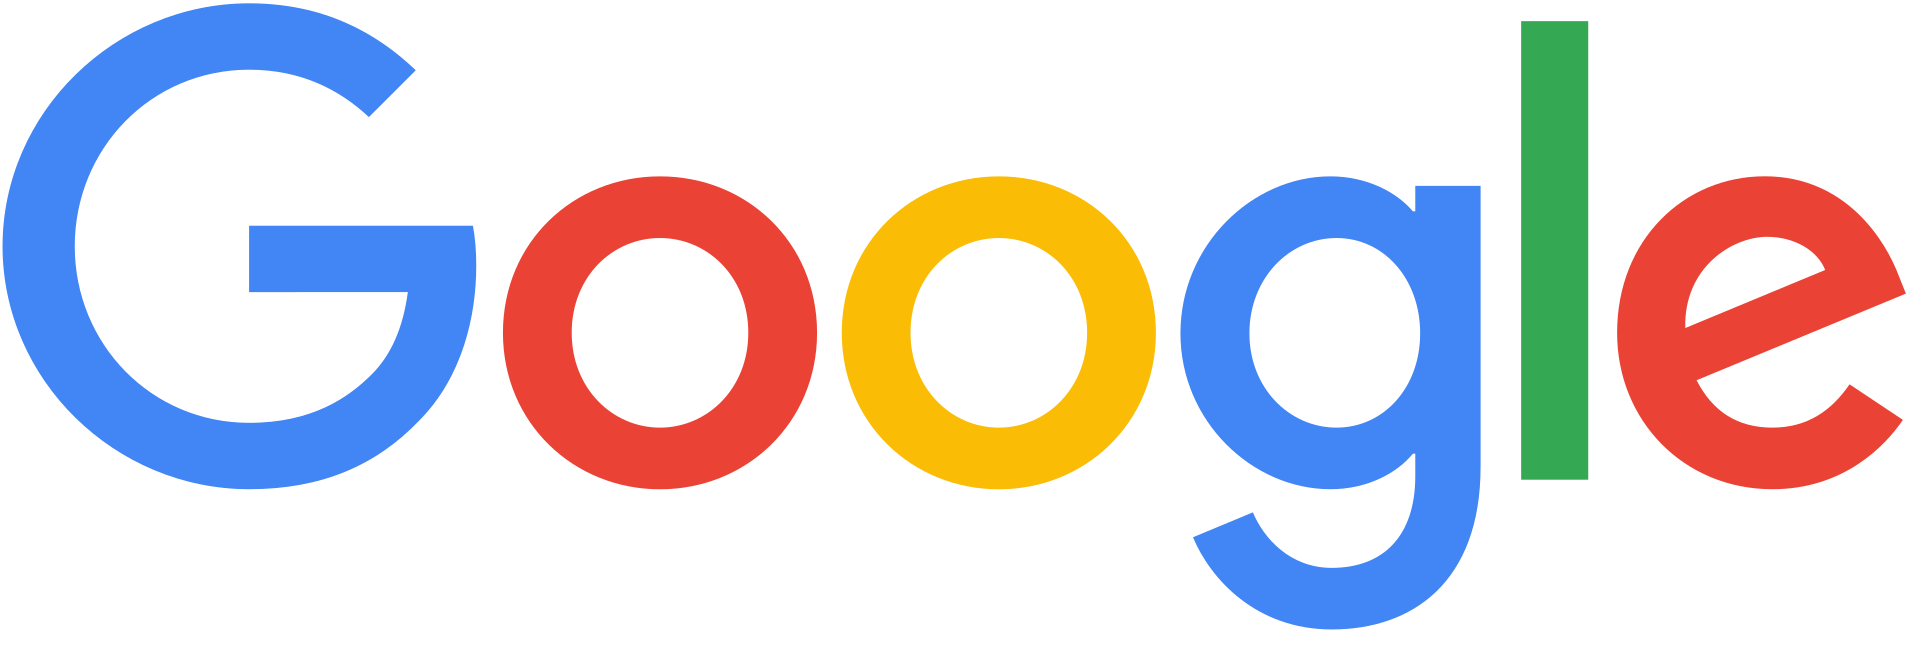 Google 2015 - Logo svg